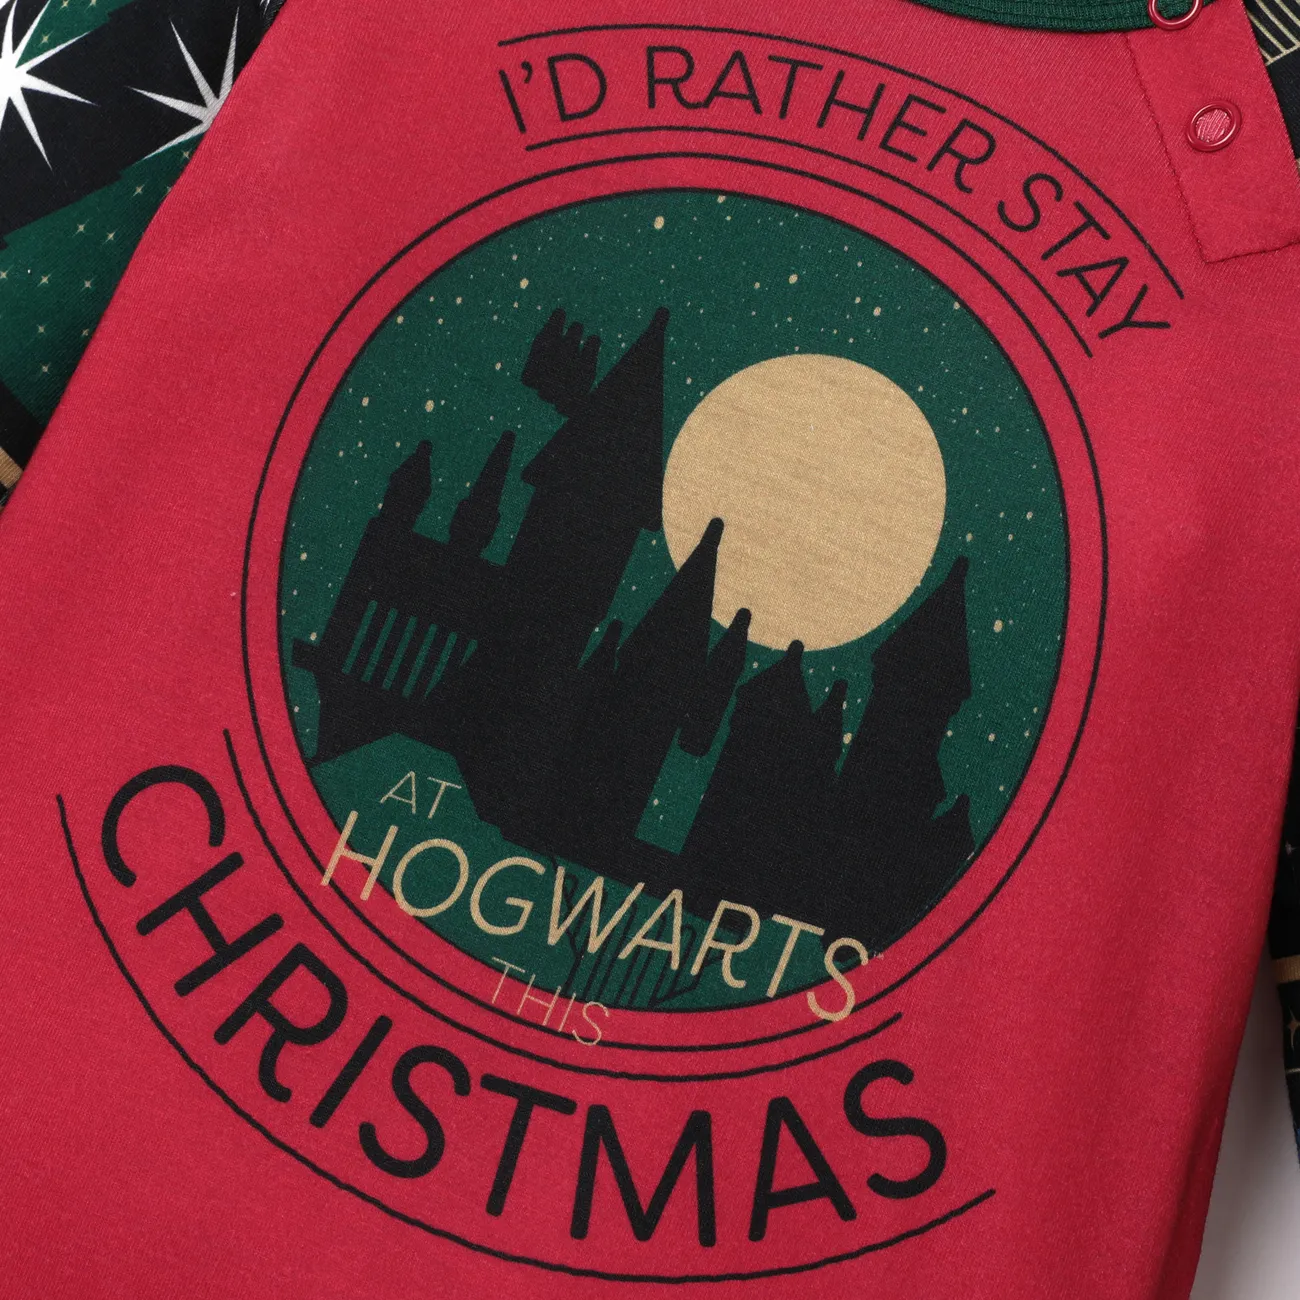 Harry Potter Navidad Looks familiares Manga larga Conjuntos combinados para familia Pijamas (Flame Resistant) Multicolor big image 1